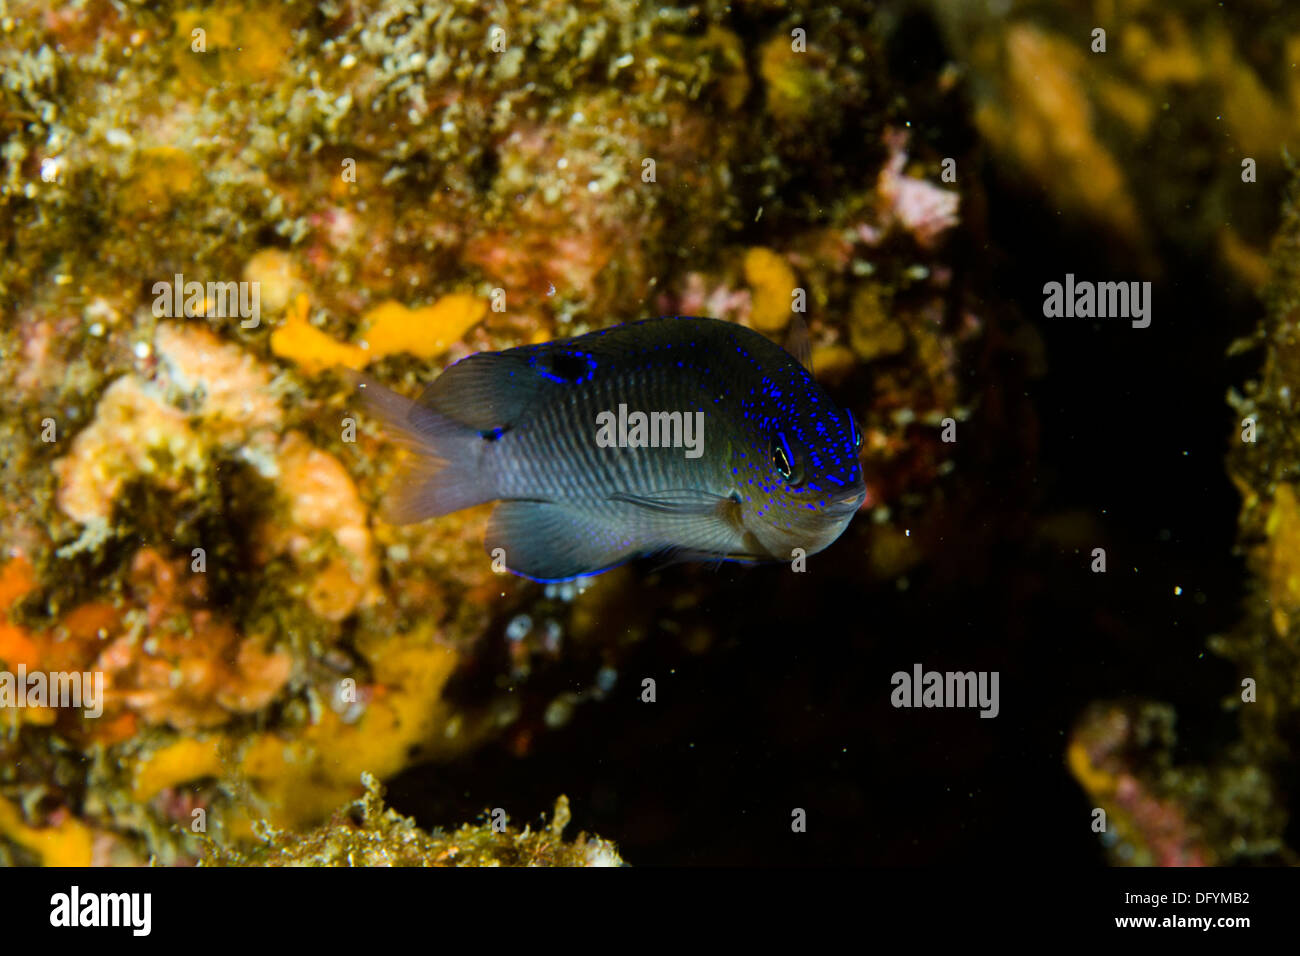 pomacentridae fish stegastes fuscus (young) underwater Laje de Santos, Sao Paulo, Brazil Stock Photo